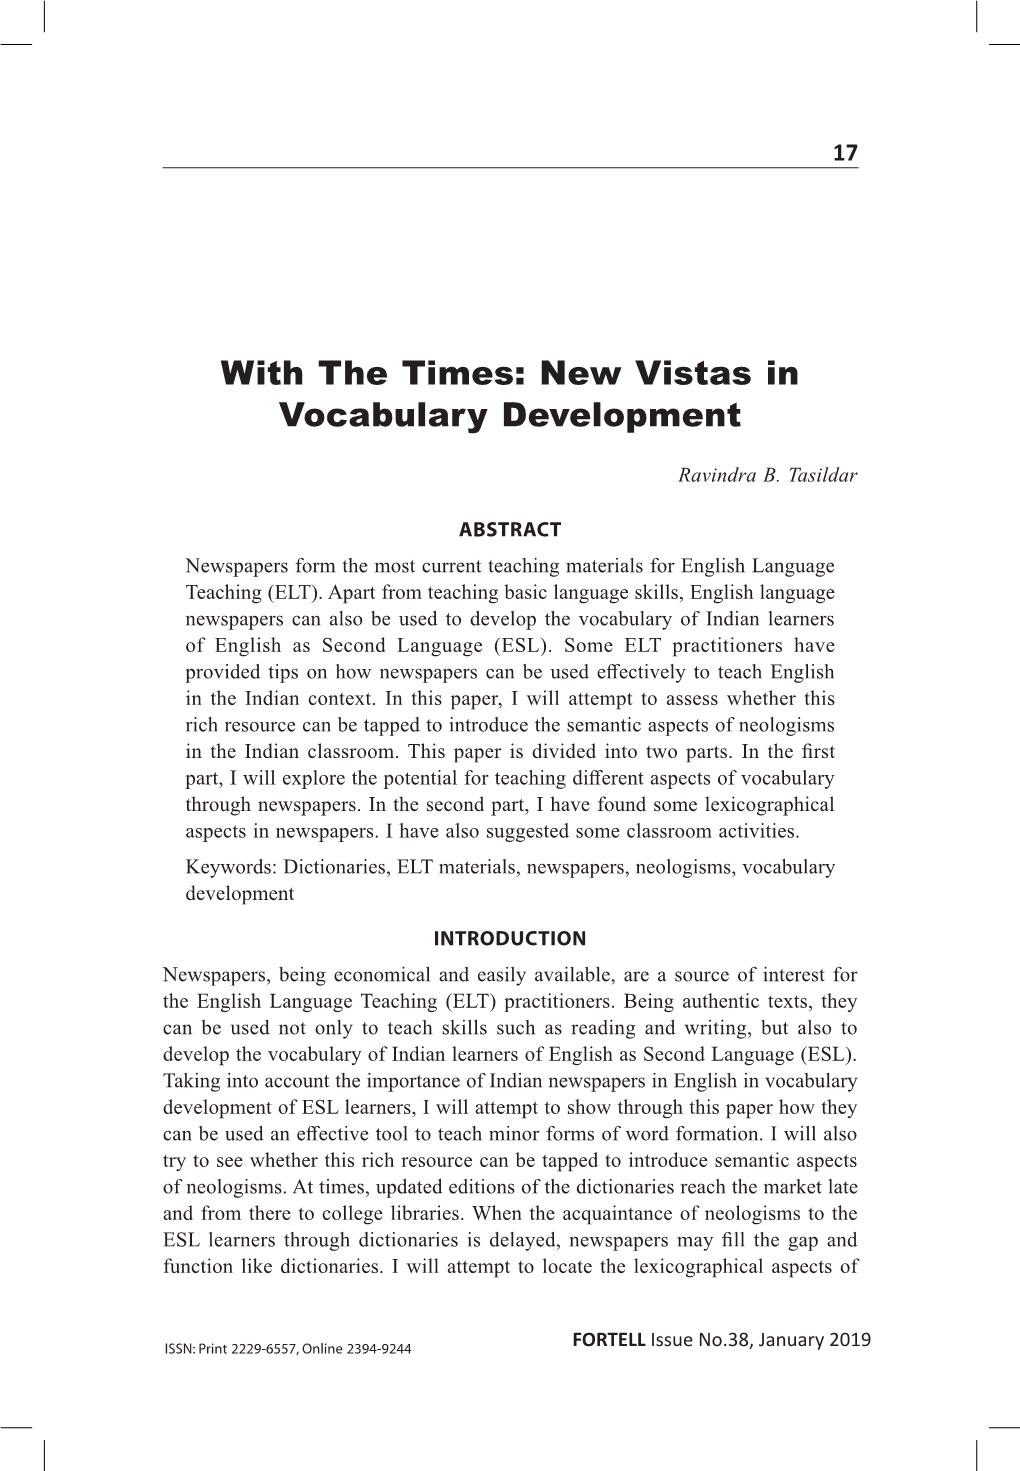 New Vistas in Vocabulary Development